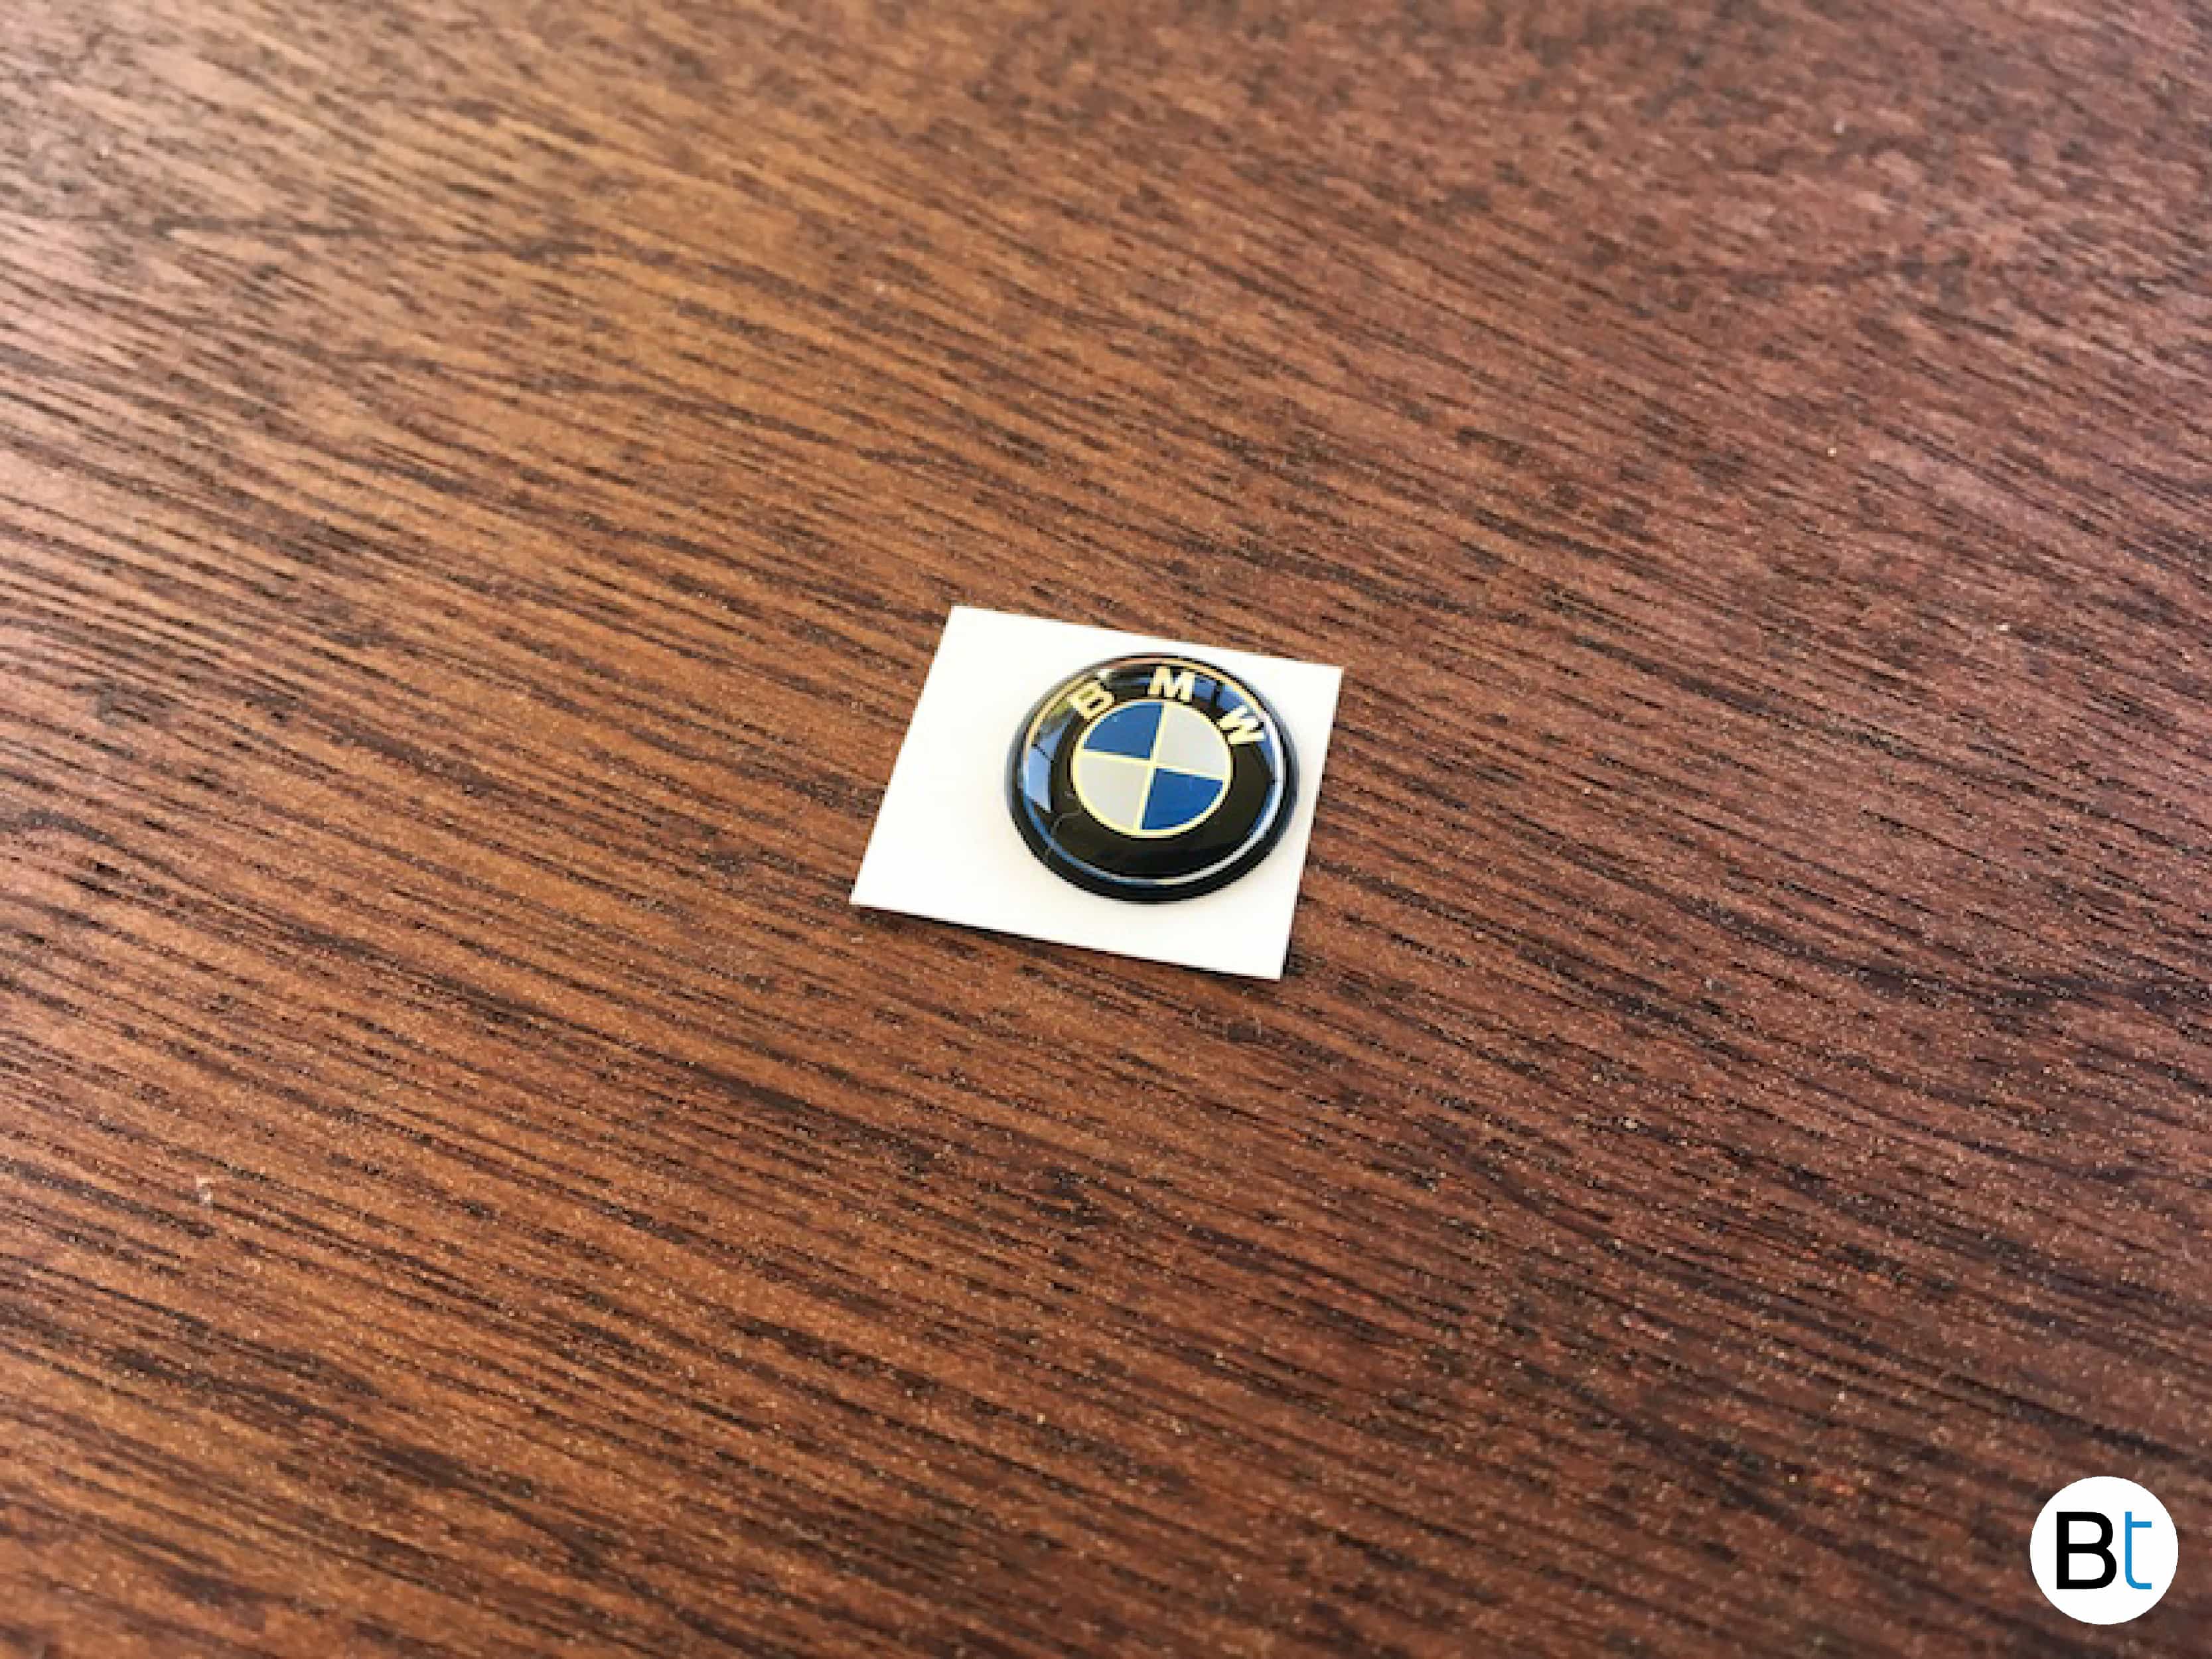 BMW key fob emblem roundel replacement part number